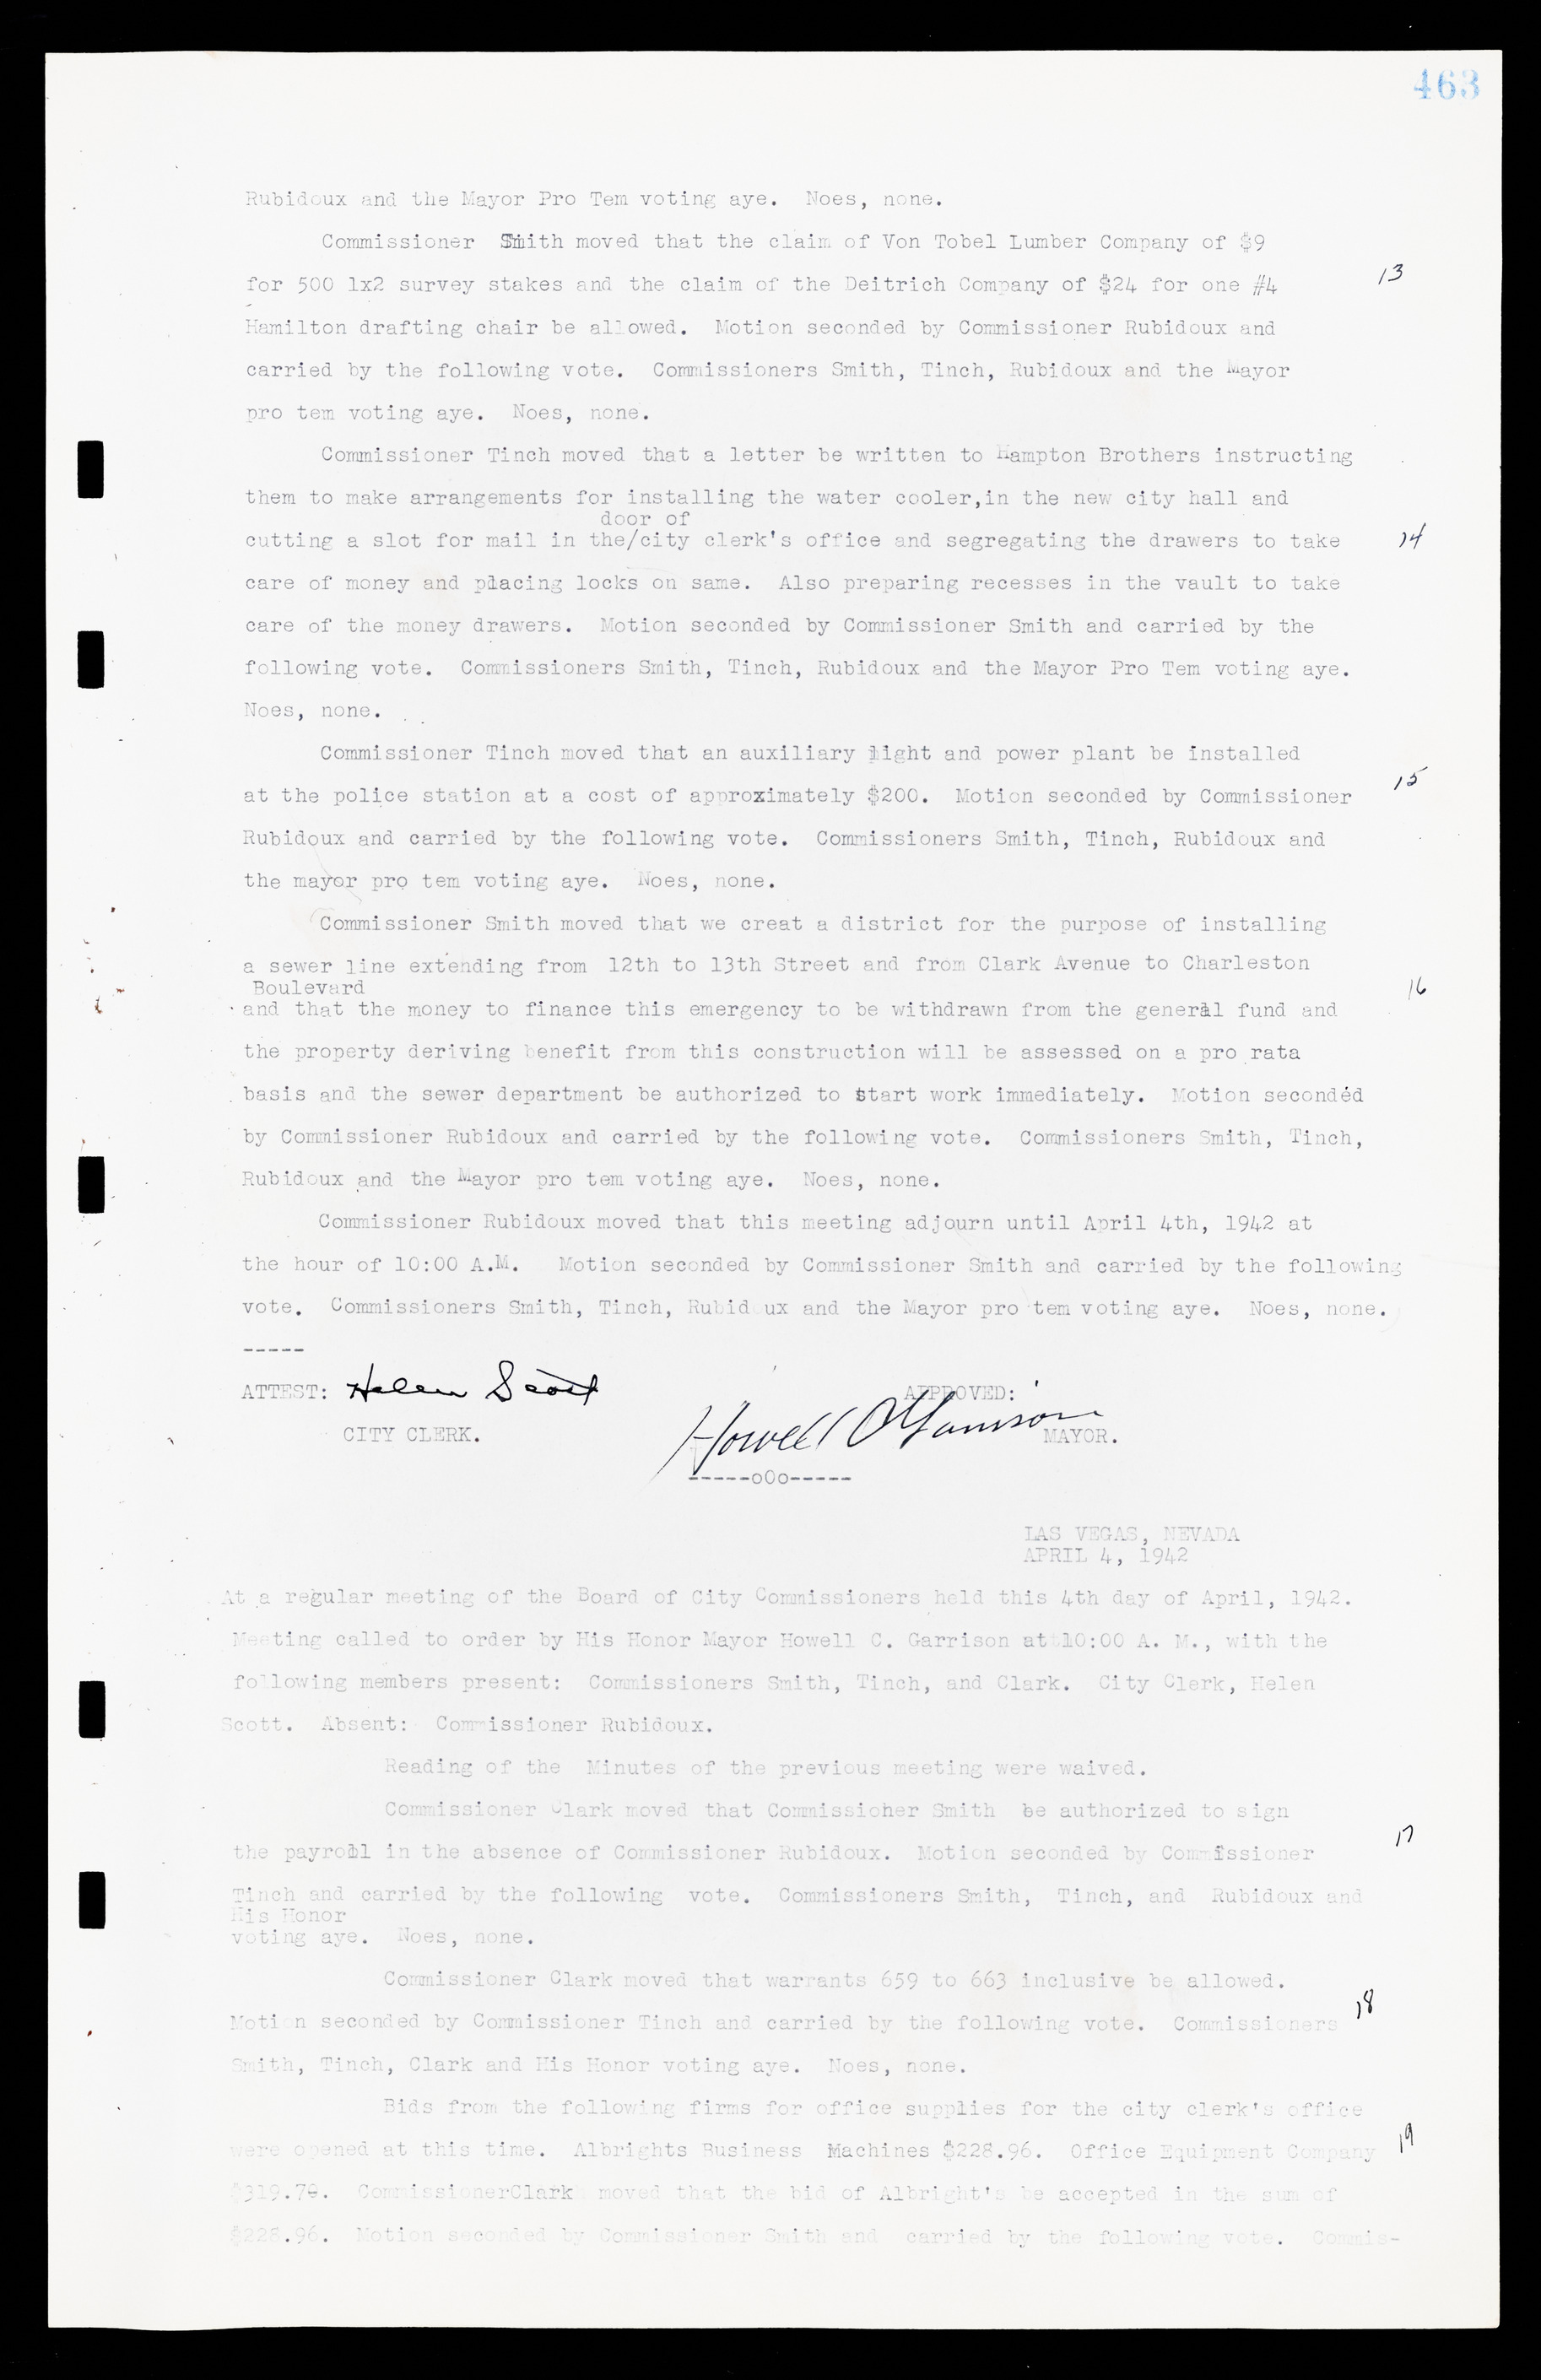 Las Vegas City Commission Minutes, February 17, 1937 to August 4, 1942, lvc000004-491